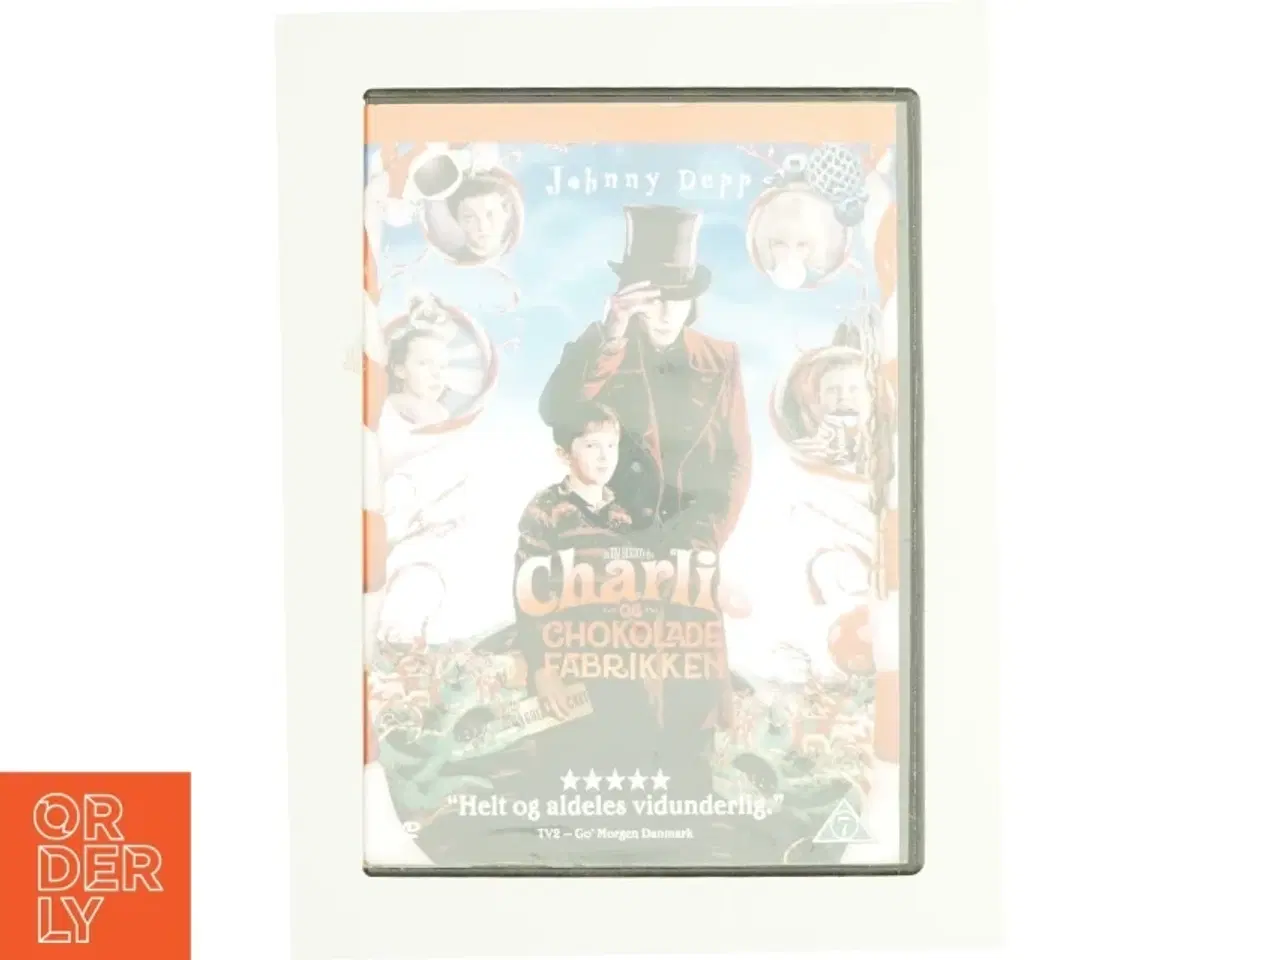 Billede 1 - Charlie og Chokoladefabriken Special Edition                            <span class="label label-blank pull-right">Special edition</span> fra DVD